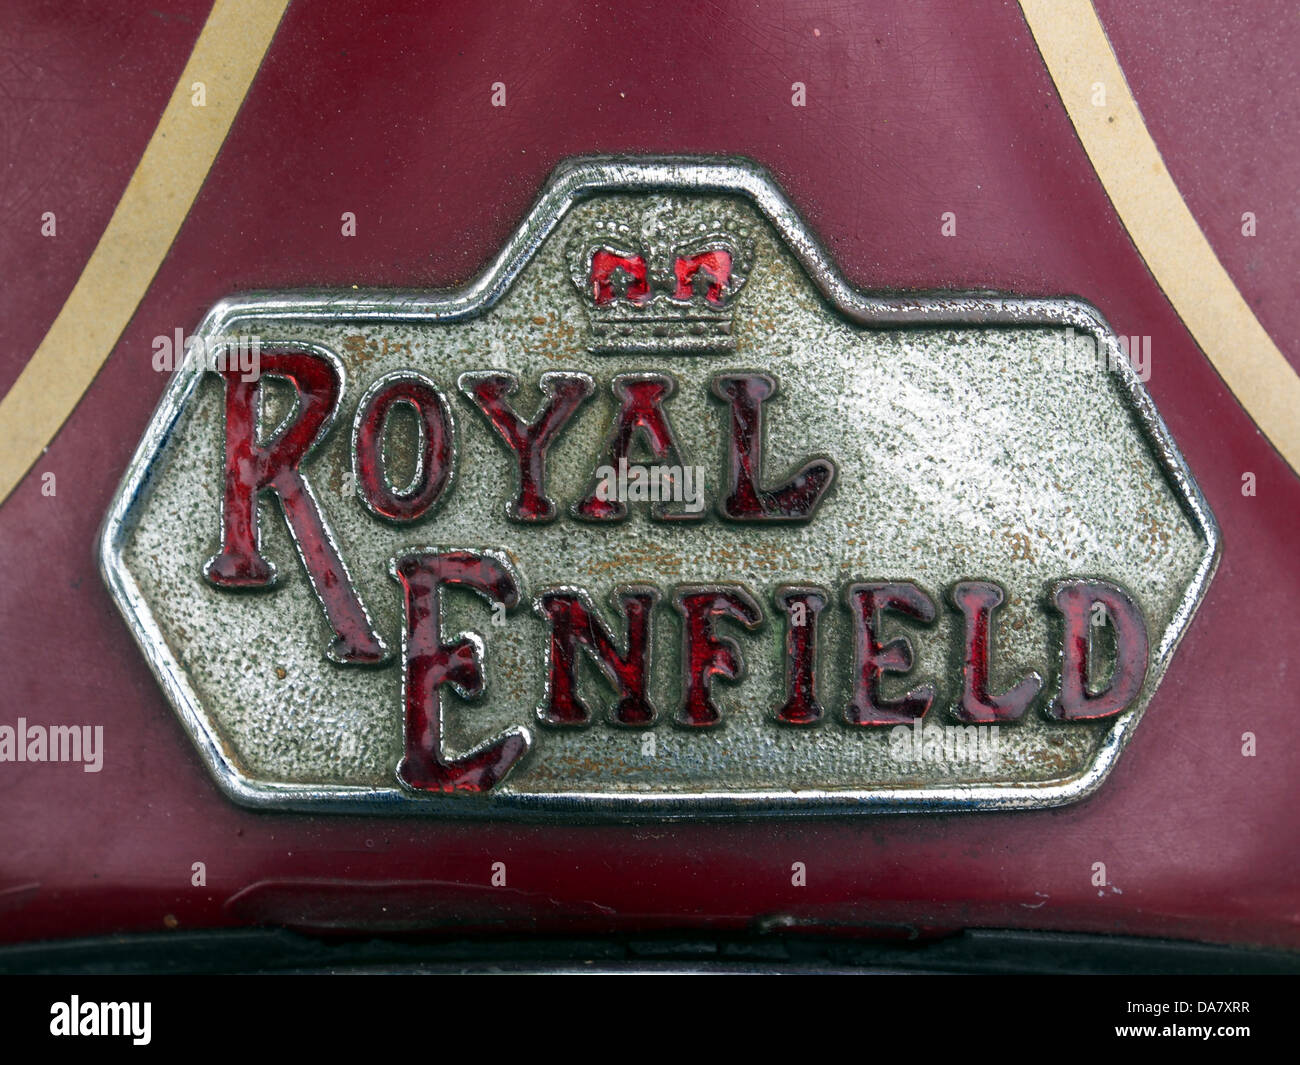 Royal Enfield logo on motorcycle Stock Photo